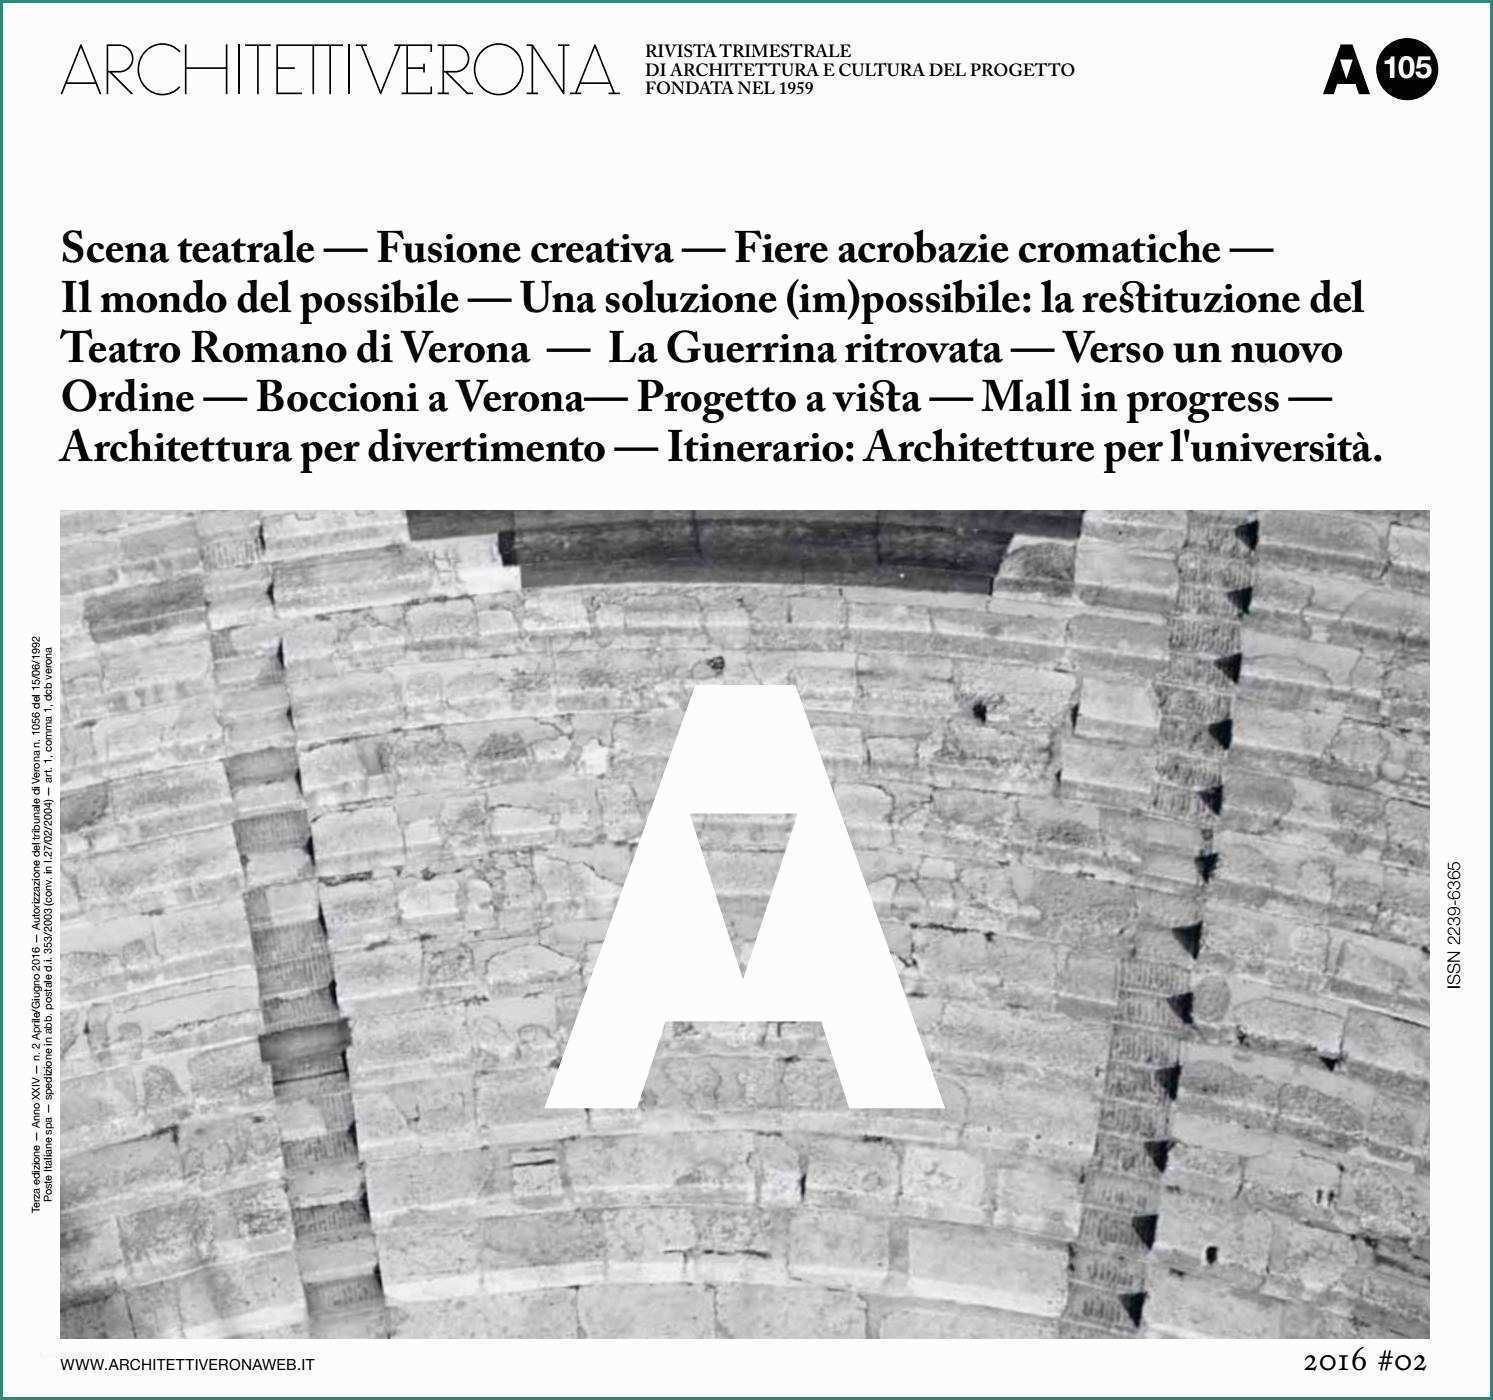 Infissi Scorrevoli Dwg E Architettiverona 105 by Architettiverona issuu